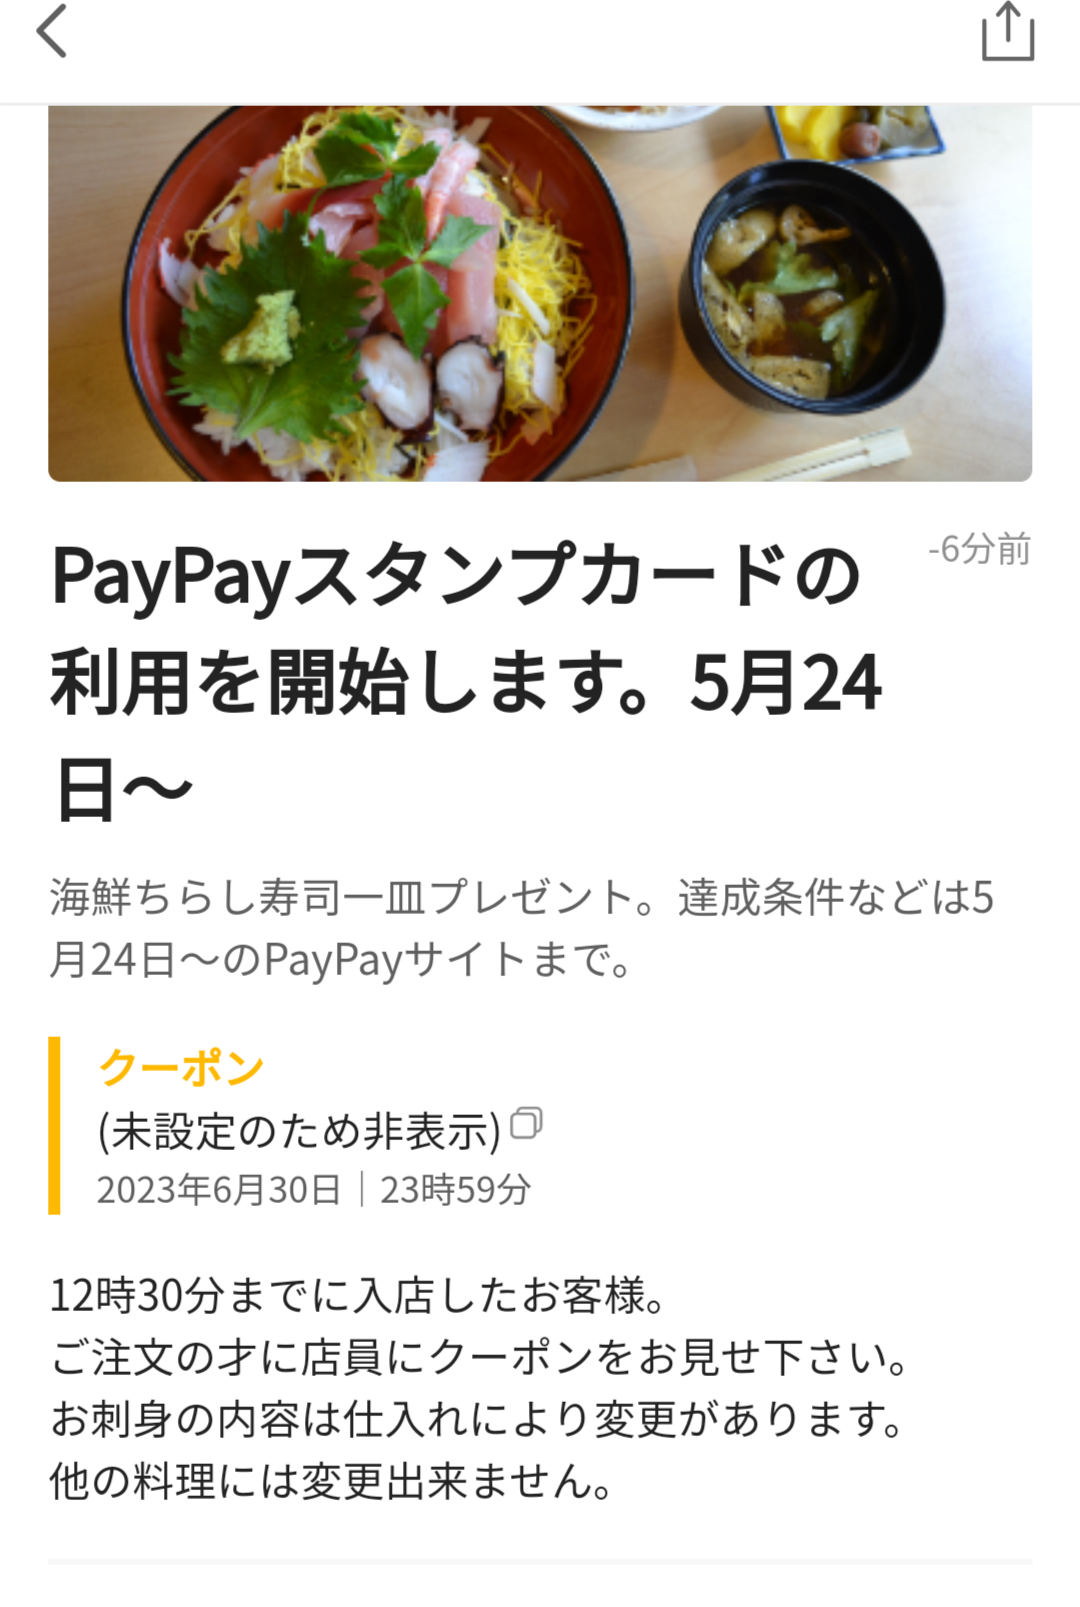 PayPayスタンプカードを始めました。